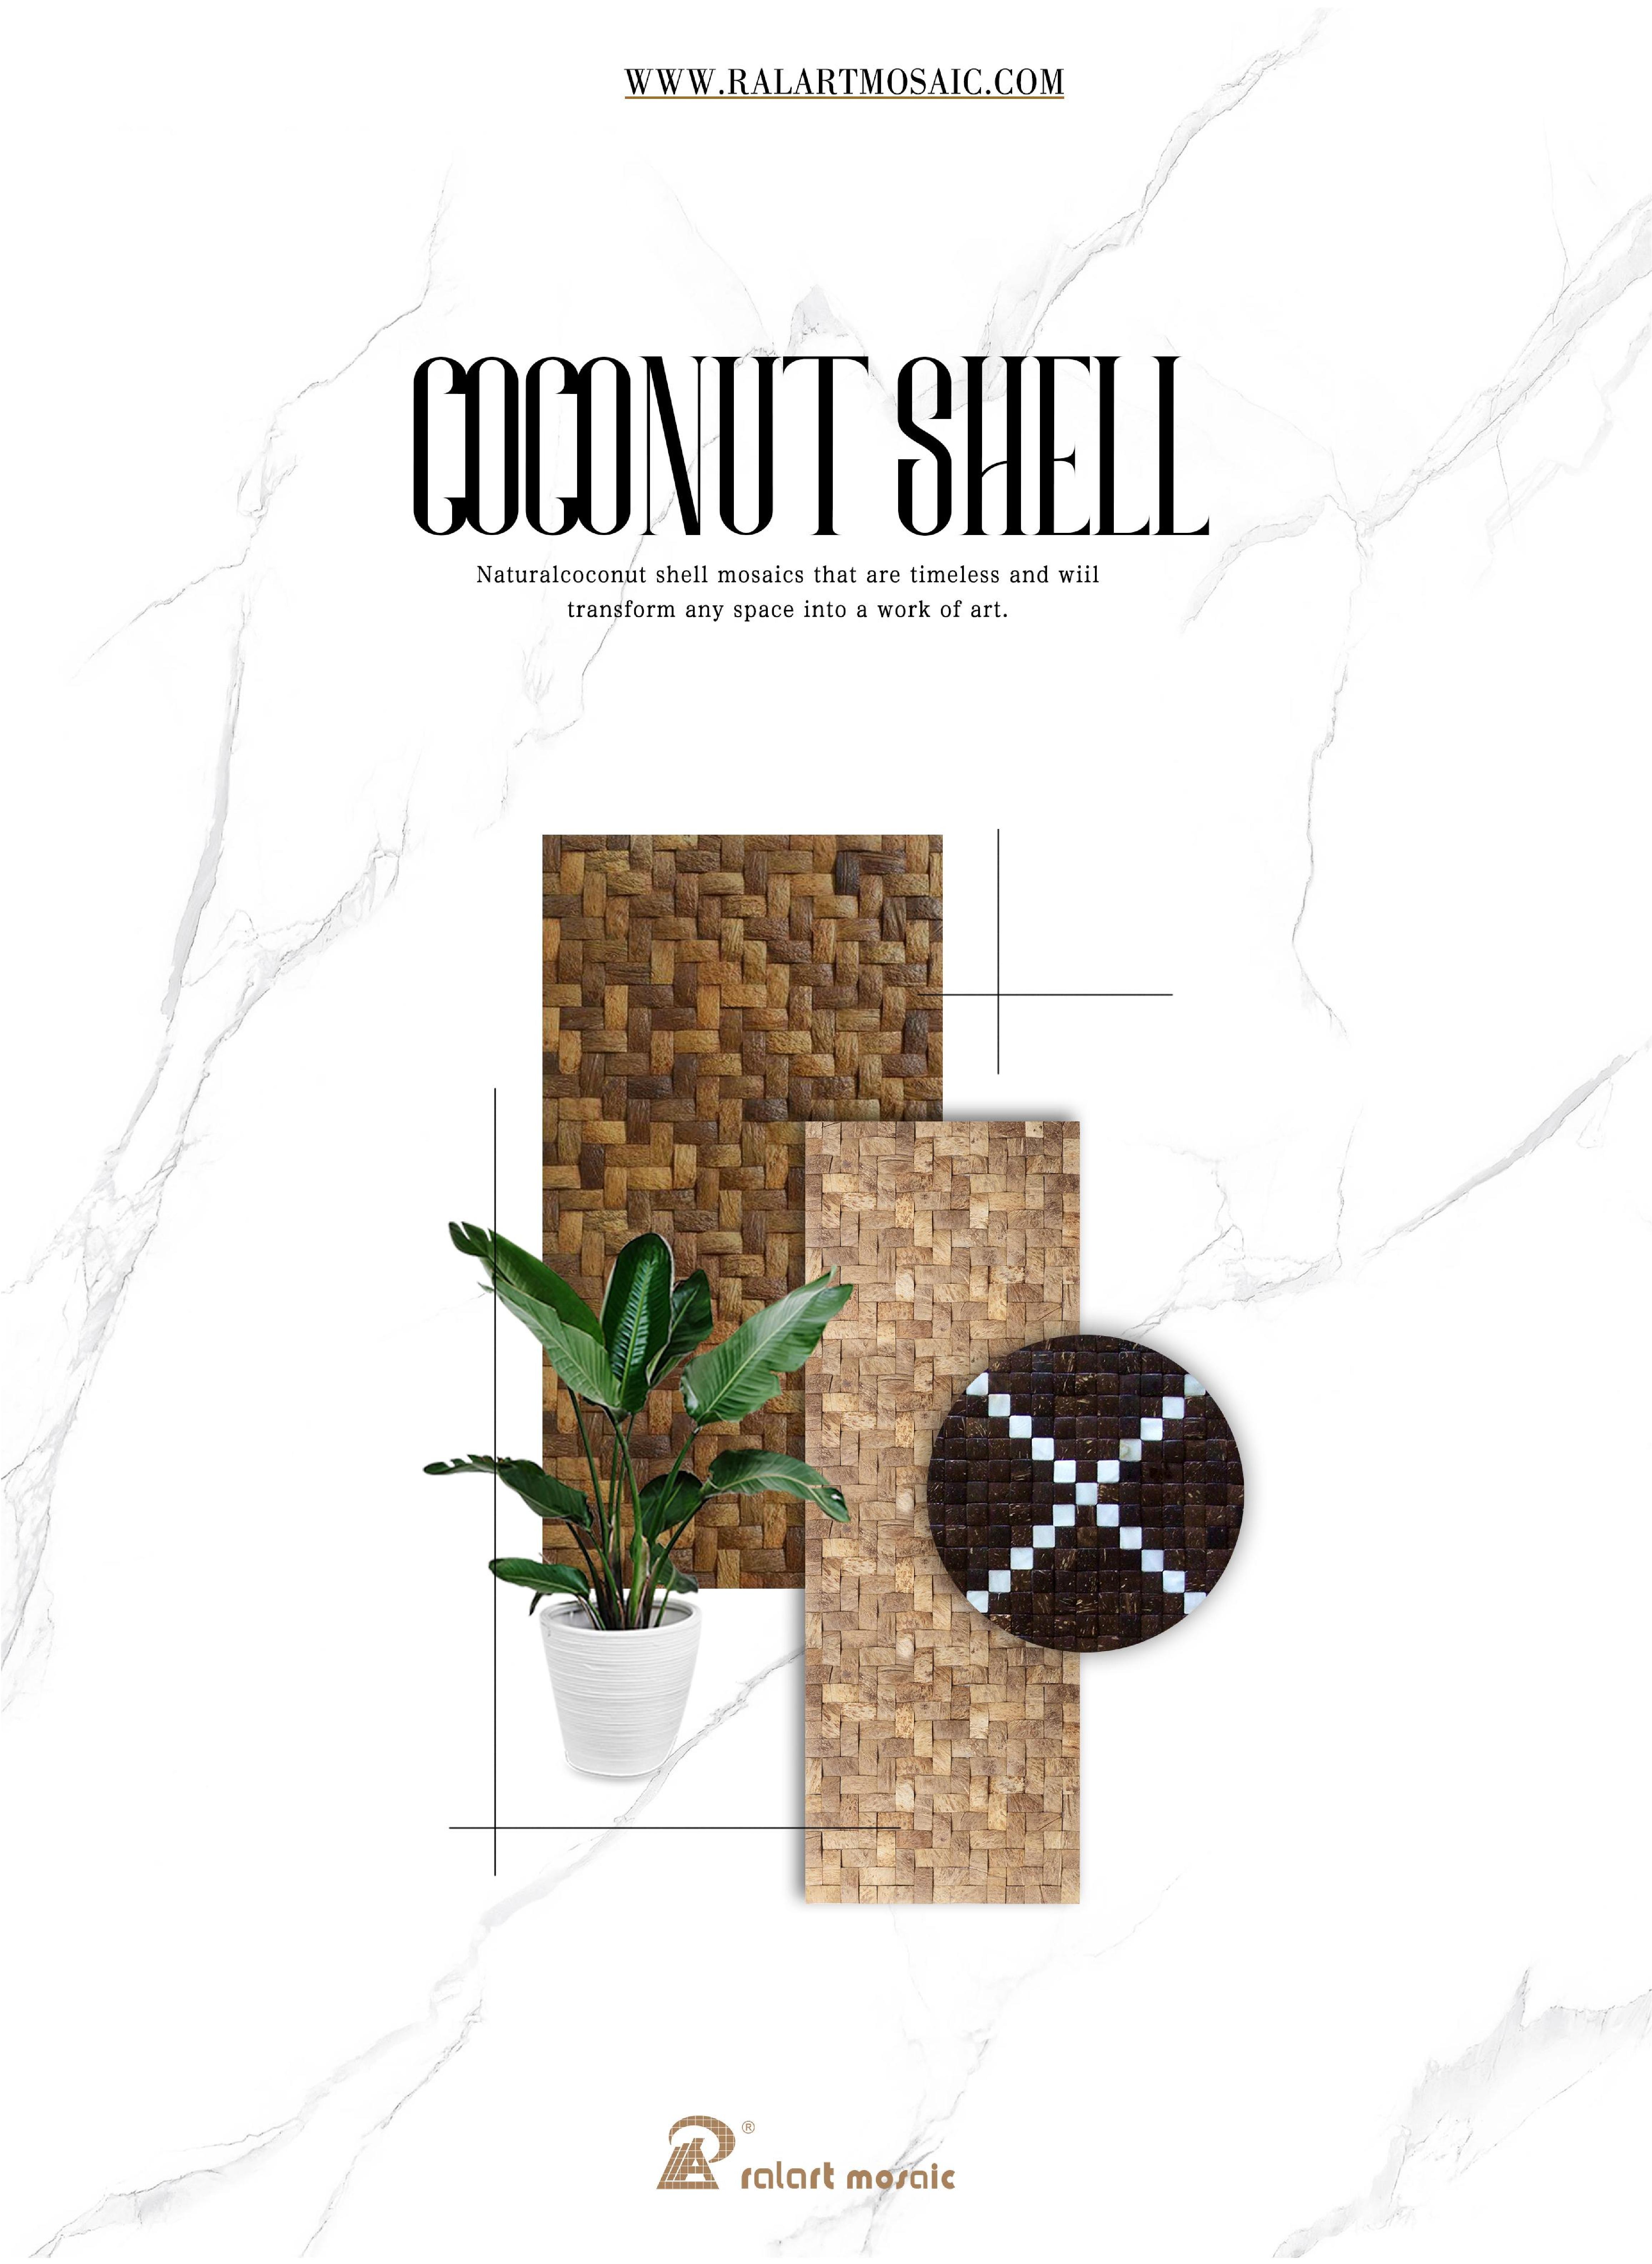 Coconut shell mosaic - Ralart Mosaic